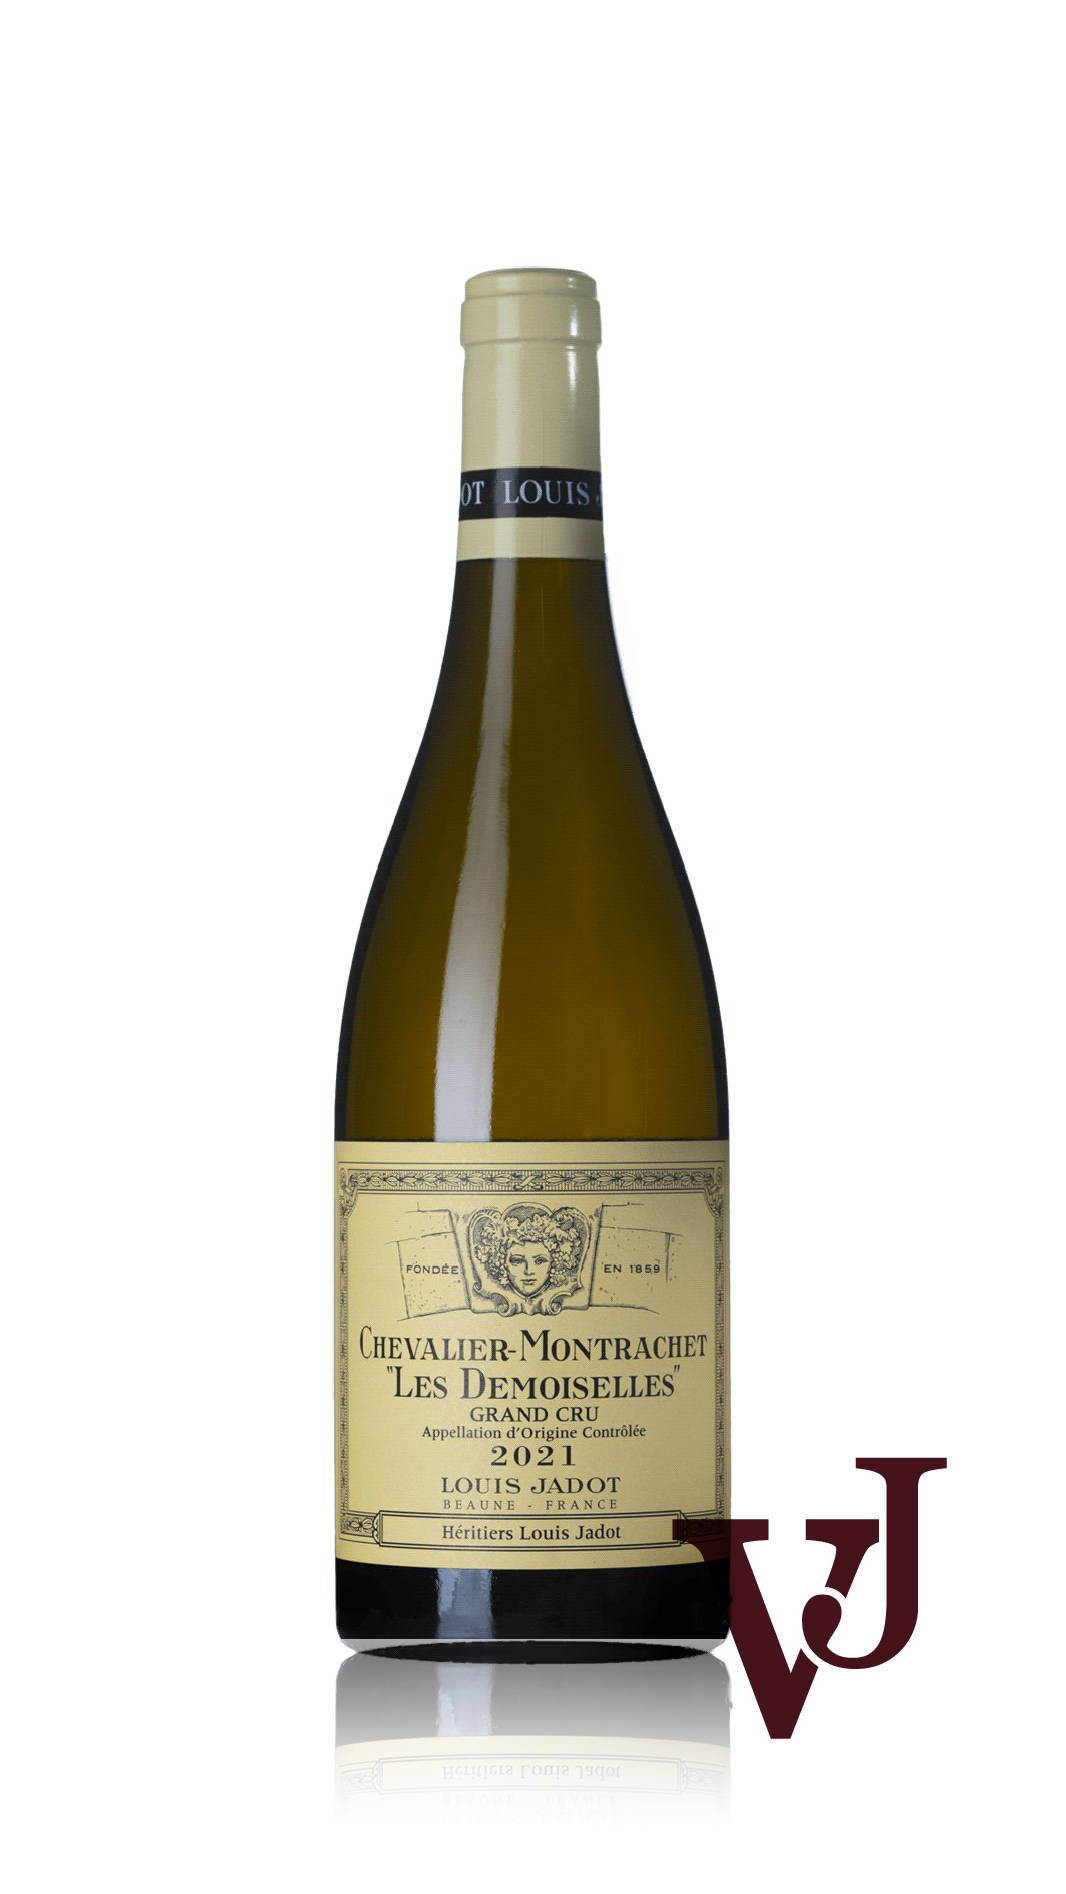 Vitt Vin - Chevalier-Montrachet Grand Cru Les Demoiselles Louis Jadot 2021 artikel nummer 9449401 från producenten Domaine de Héritieres Louis Jadot från Frankrike